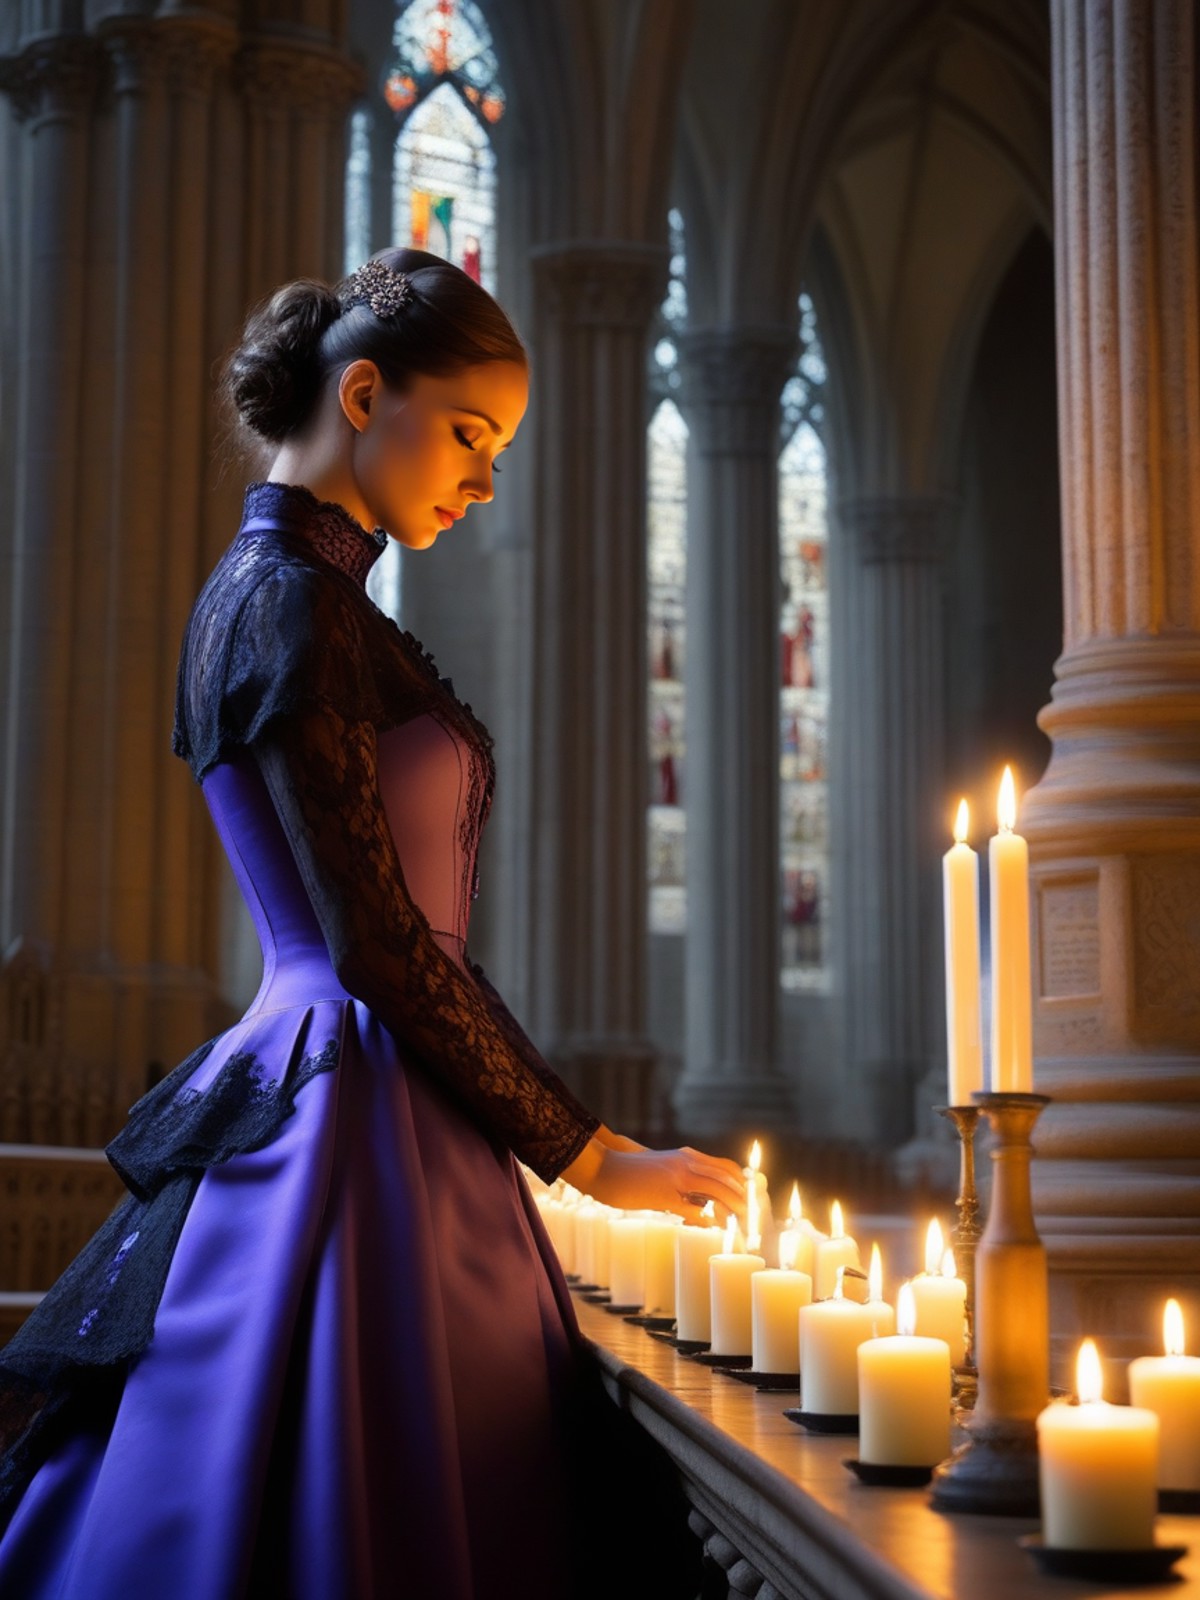 breathtaking woman wearing a purple (victorian dress), <lora:victorian_dress-XL-2.0:1>
candles, cathedral, stone pillar, p...